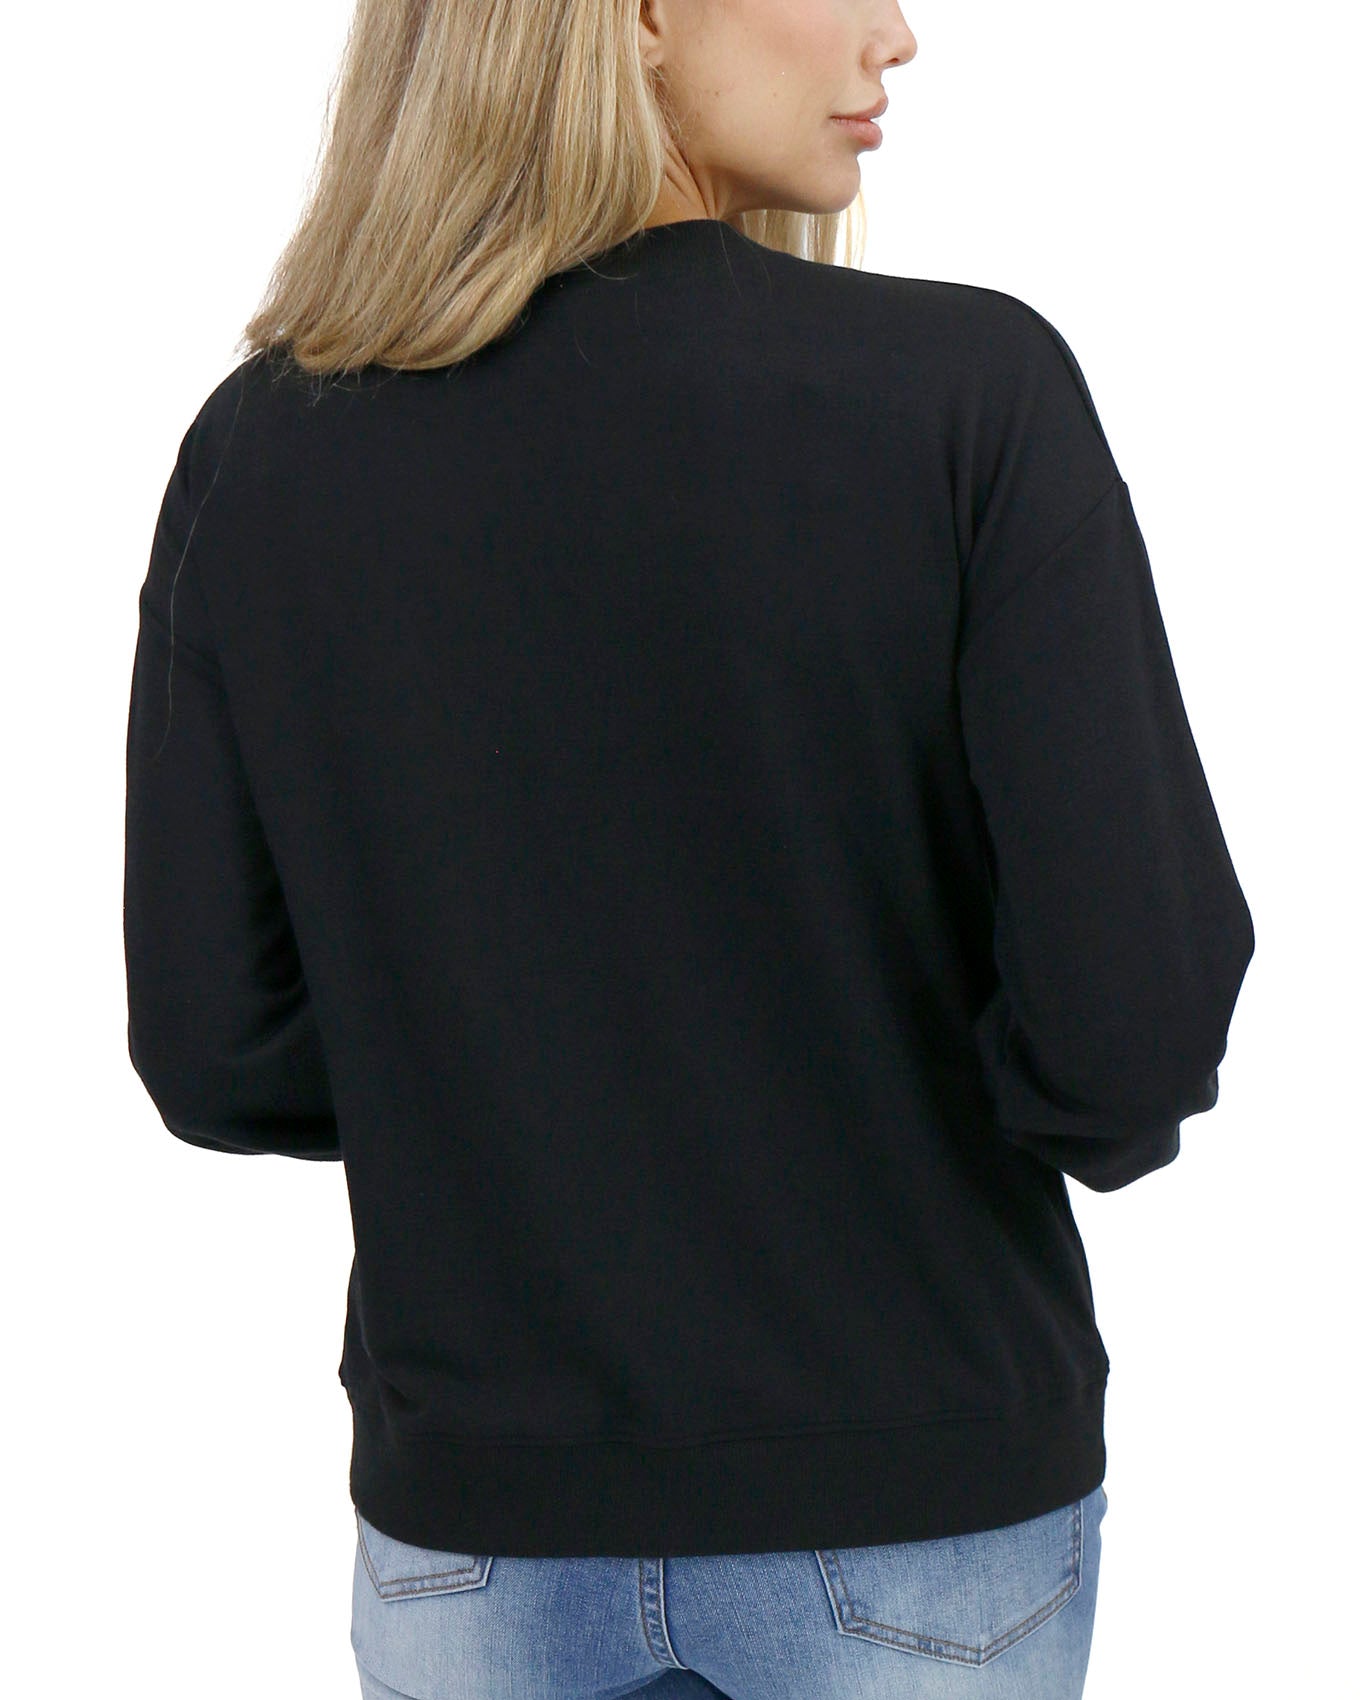 back view stock shot of soft black sweatshirt